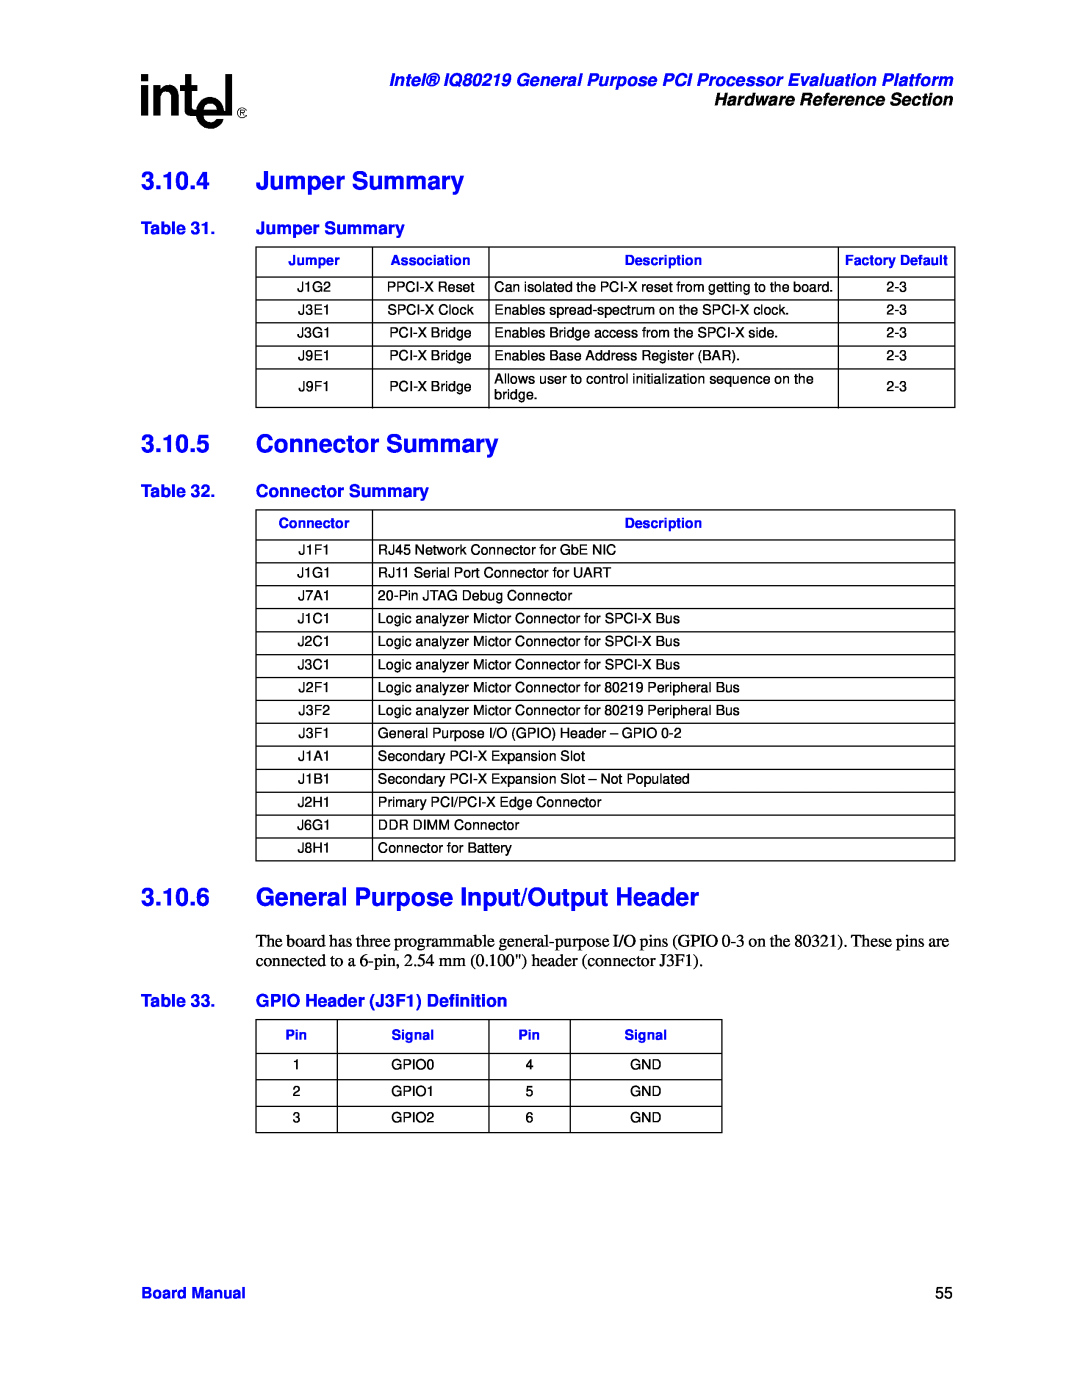 Intel IQ80219 manual Jumper Summary, Connector Summary, General Purpose Input/Output Header, GPIO Header J3F1 Definition 